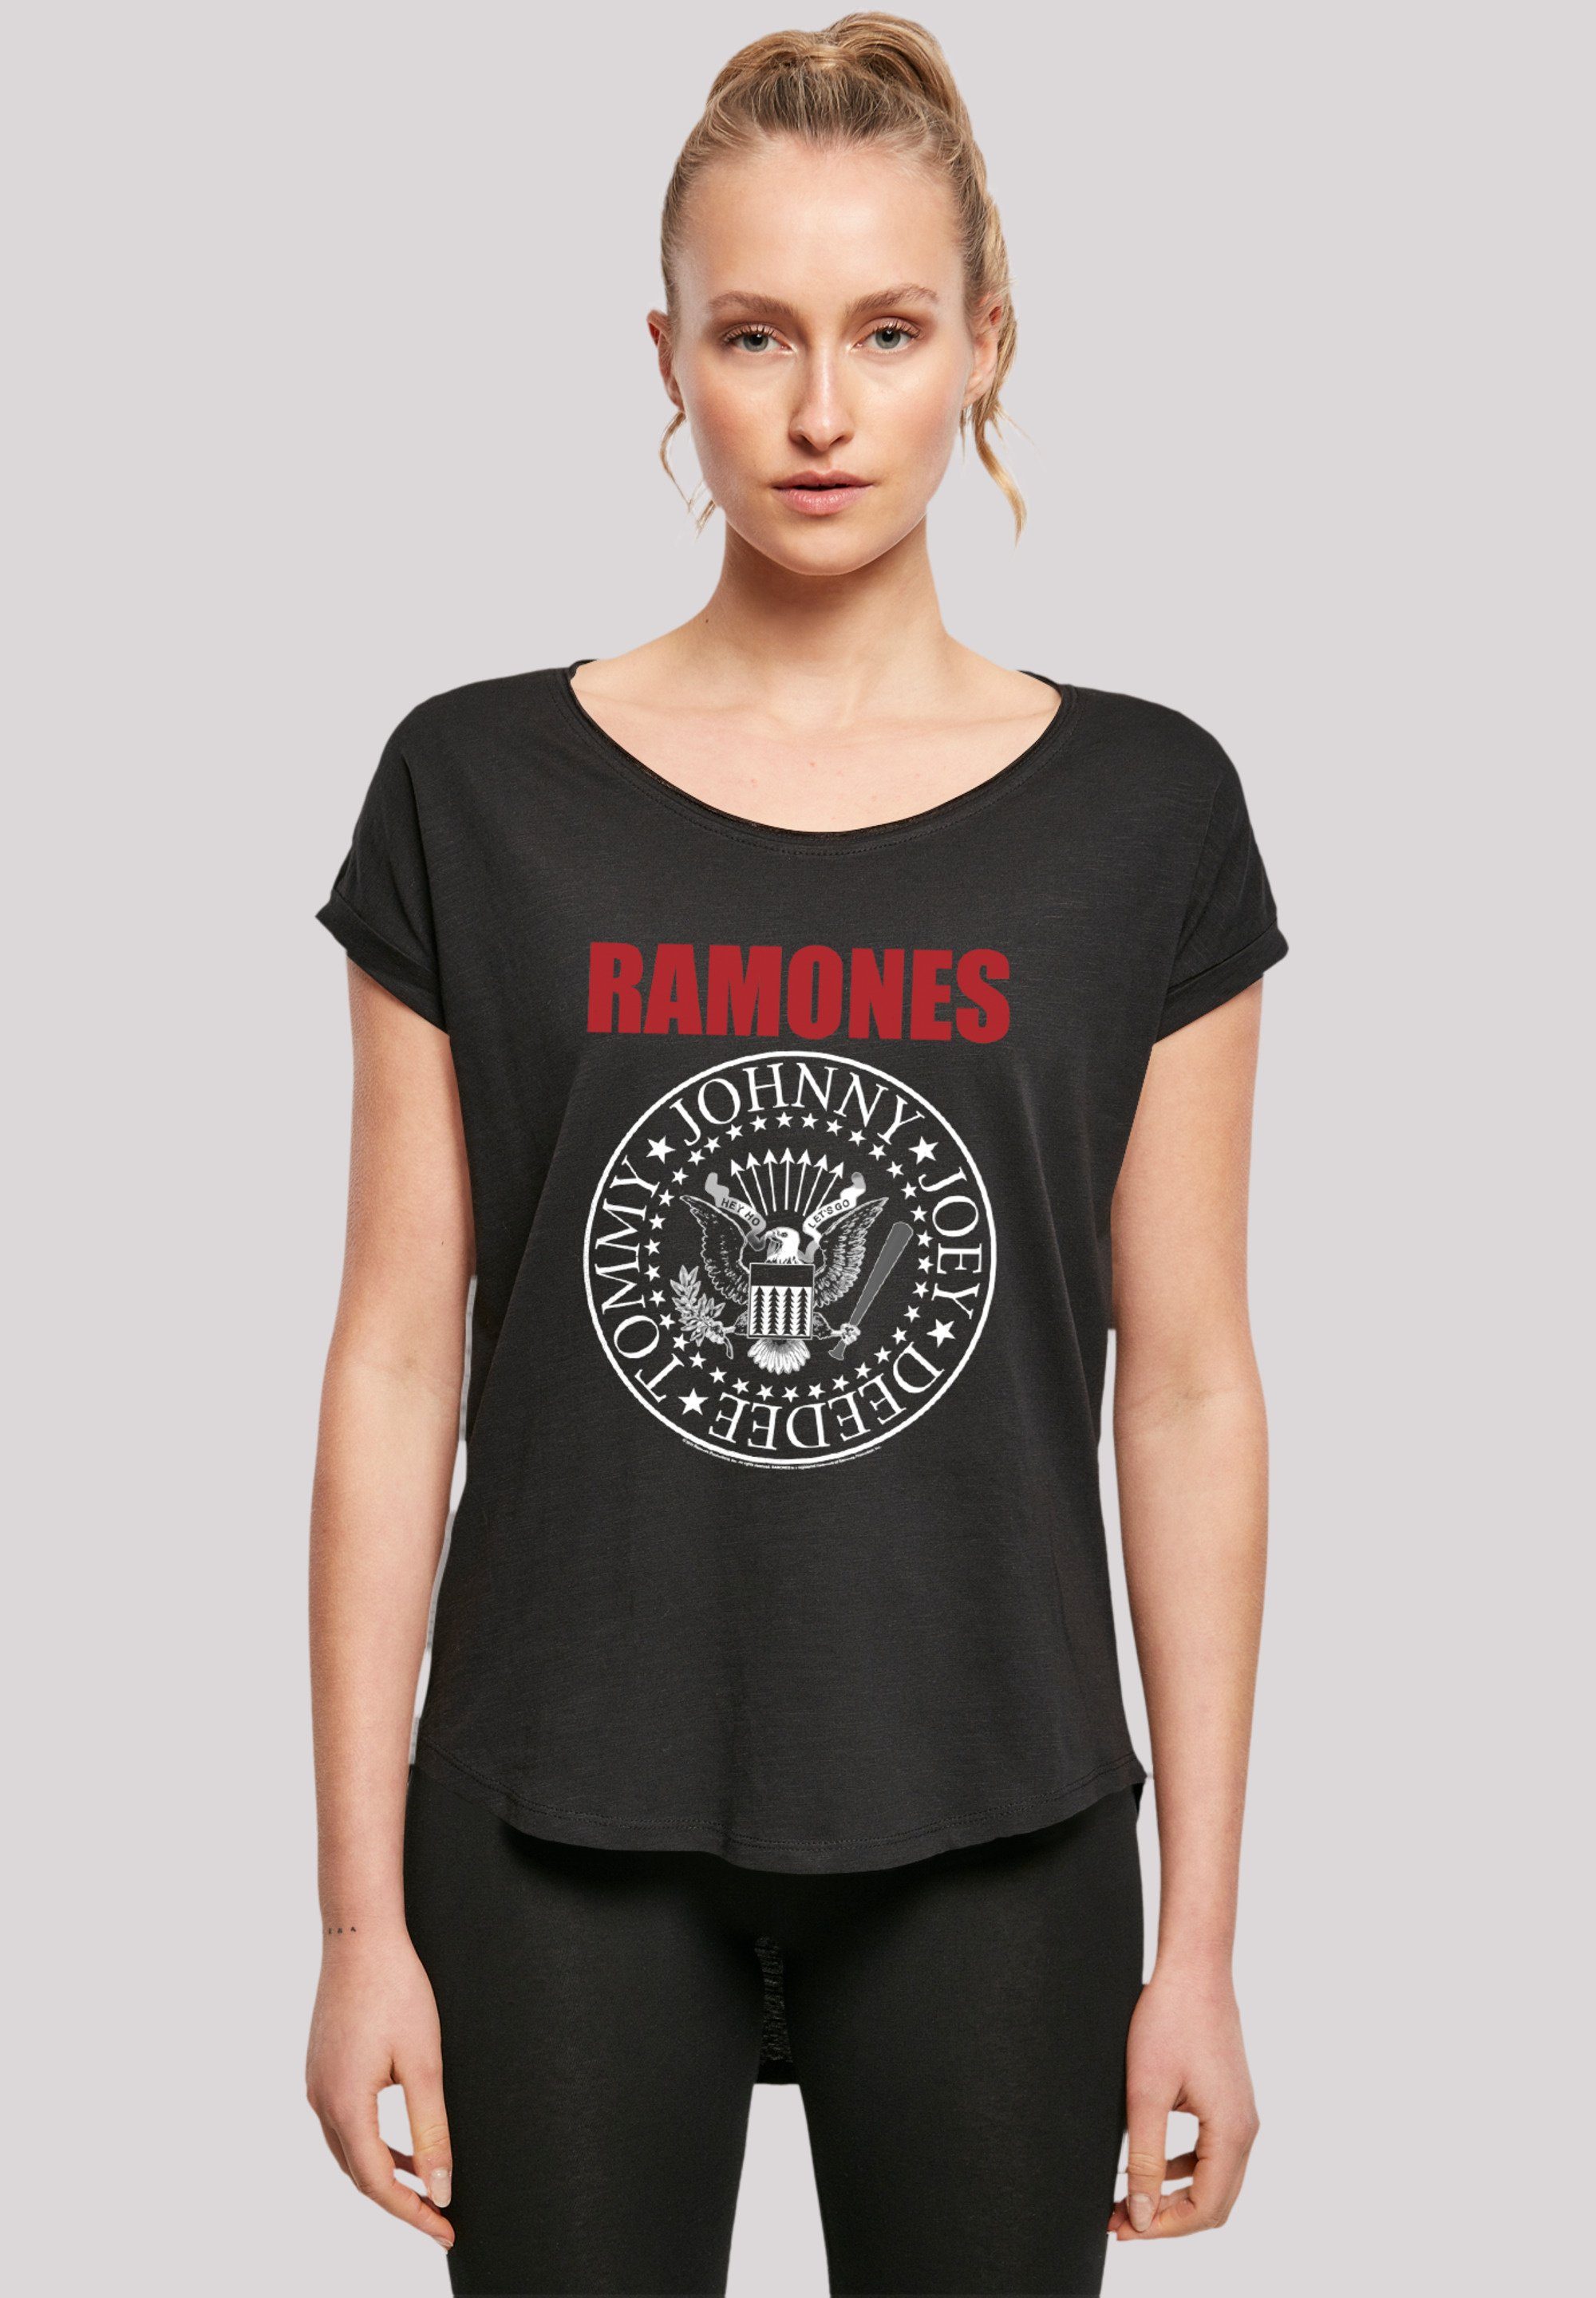 Empfohlener Versandhandel F4NT4STIC T-Shirt Ramones T-Shirt Rock-Musik, Damen lang Qualität, Rock Band Band, Seal extra Hinten Premium geschnittenes Text Musik Red